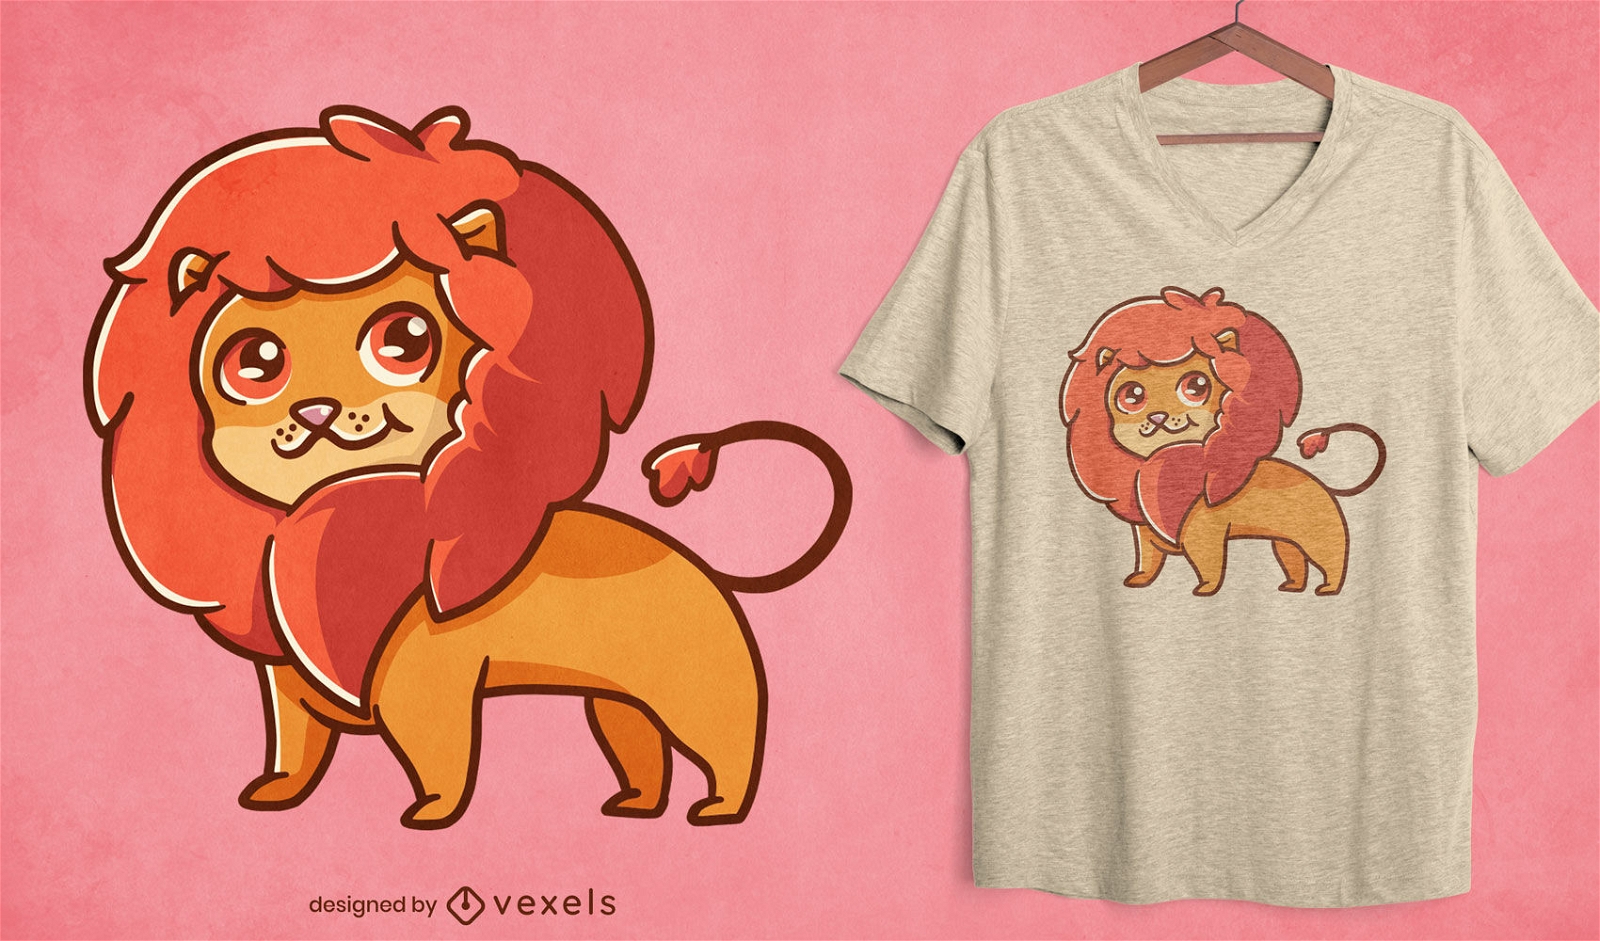 Cute lion t-shirt design